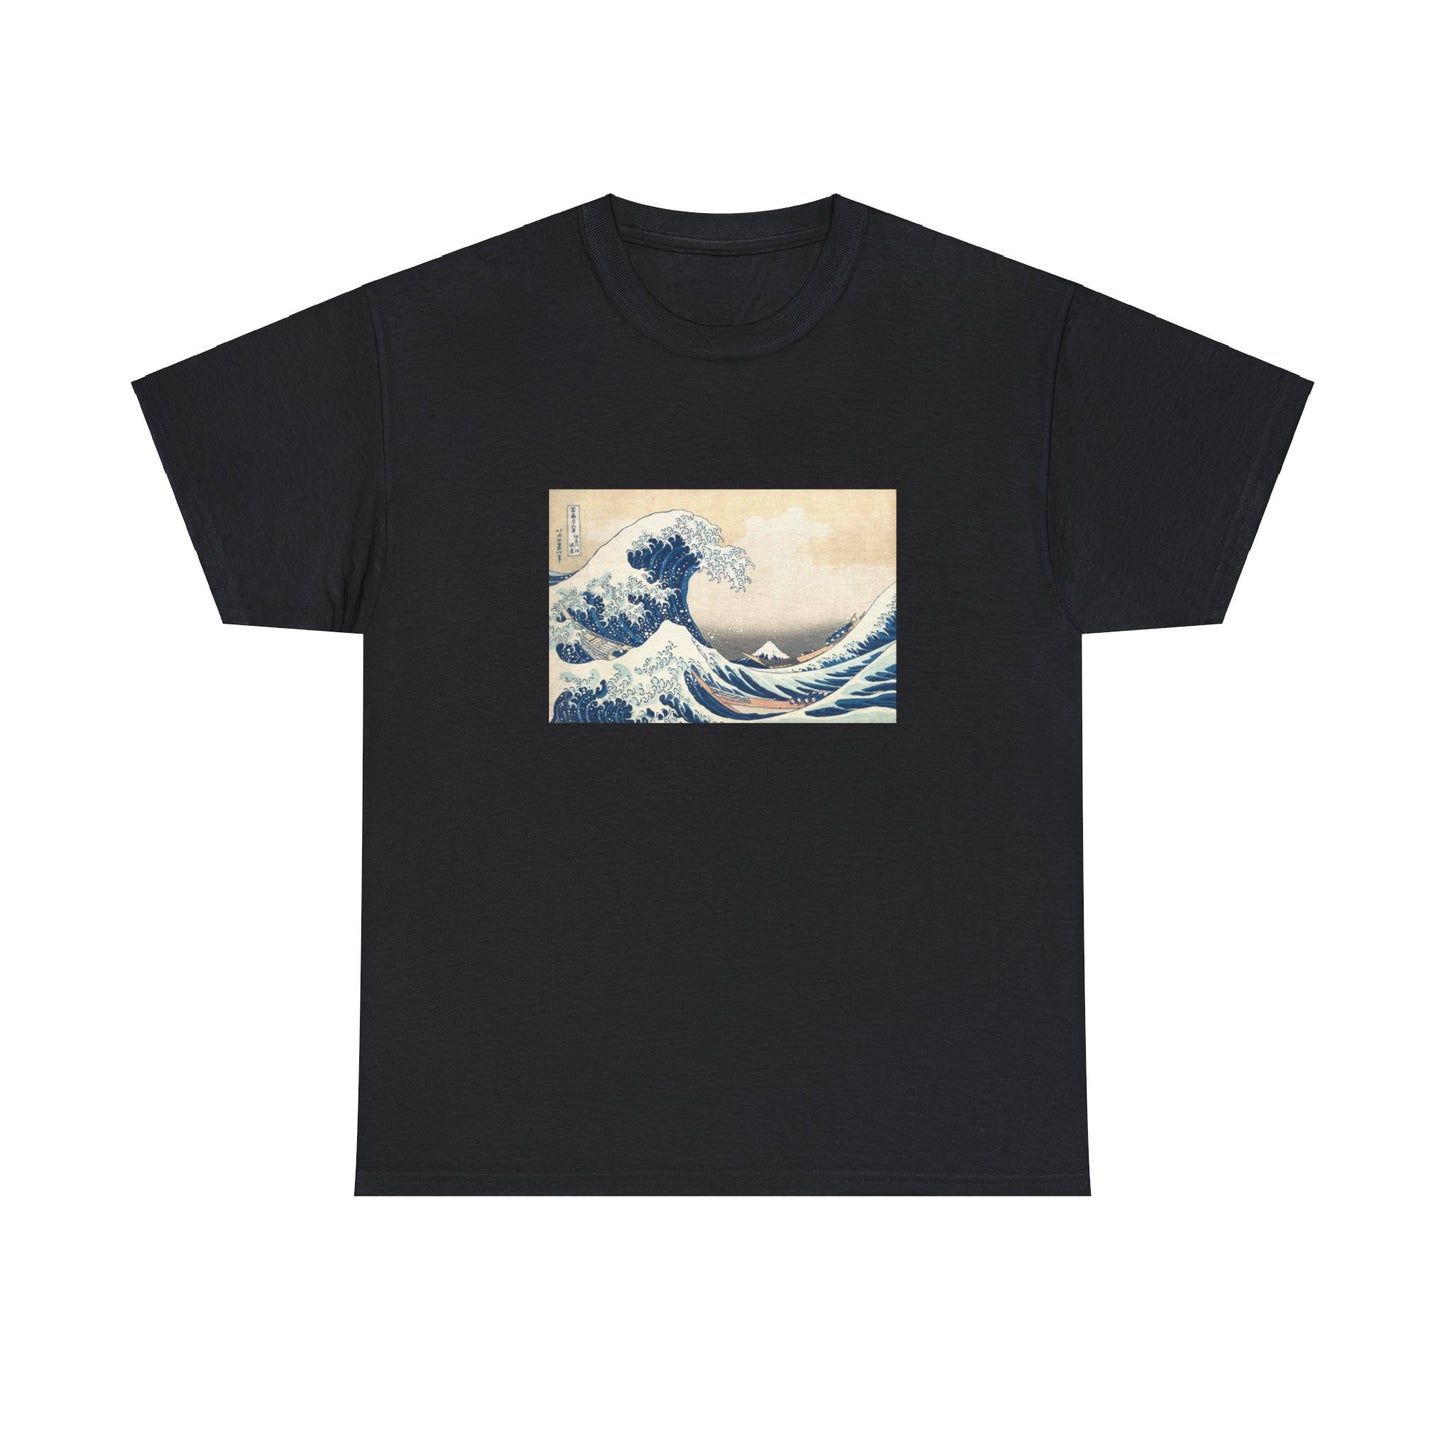 The Great Wave off Kanagawa - Hokusai (1831)